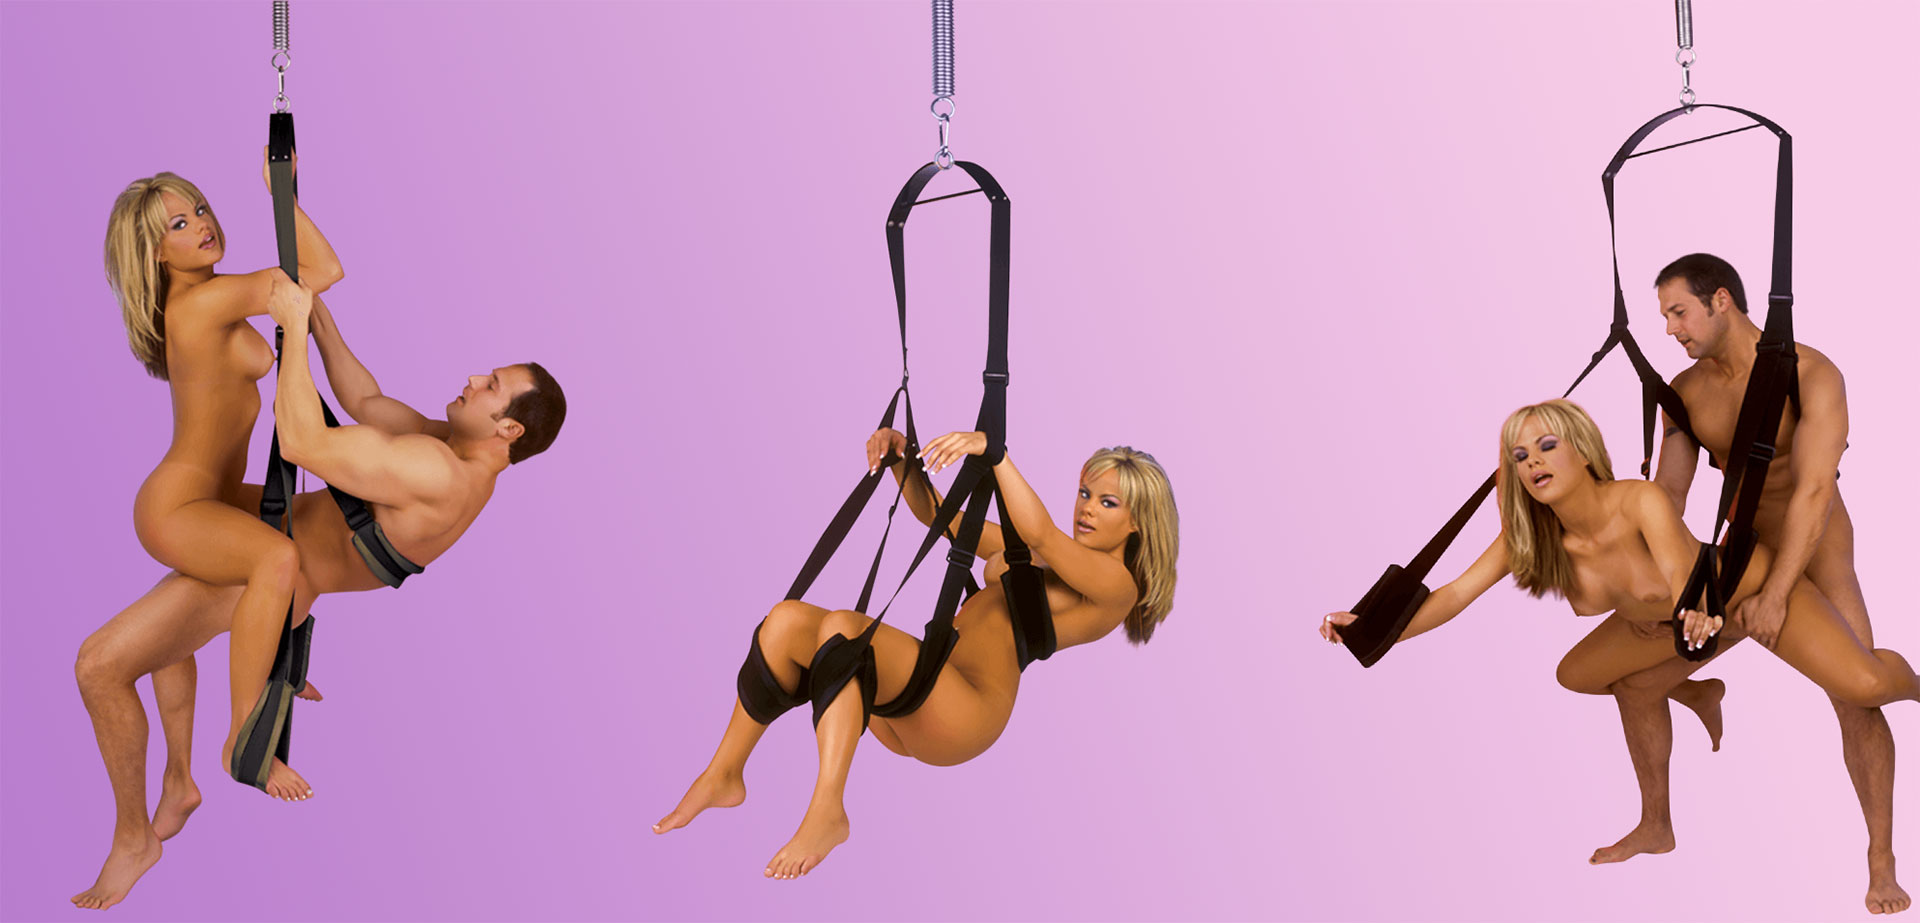 Swing sex toy